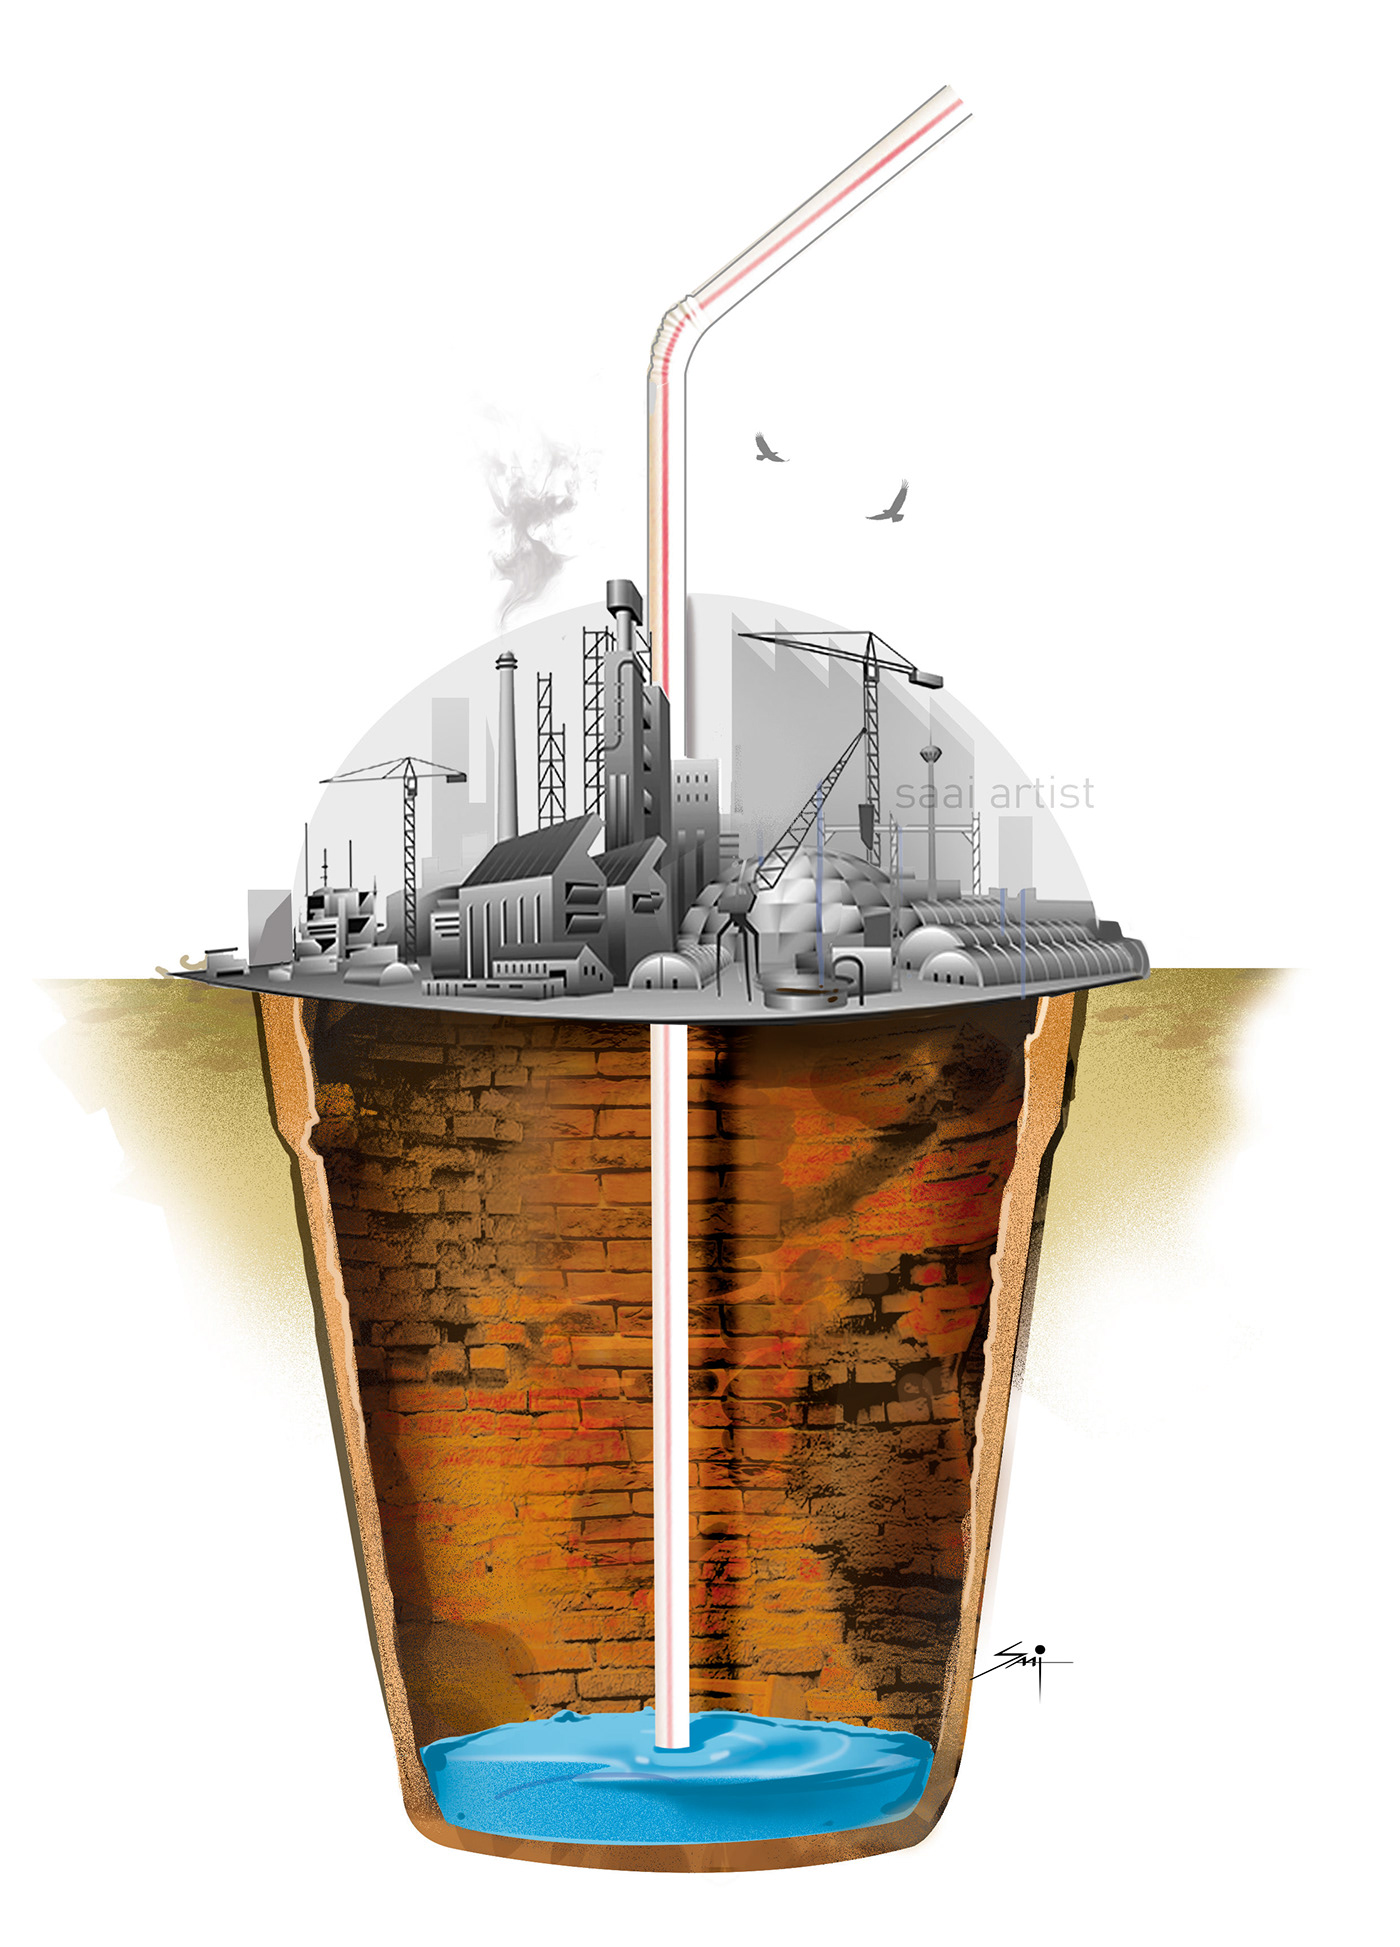 FACTORYWATERSUPPLY India Industrialcity INDUSTRYWATERCRISIS INDUSTRYWATERPROBLEM nowater saaiartist watercrisis waterscarcity